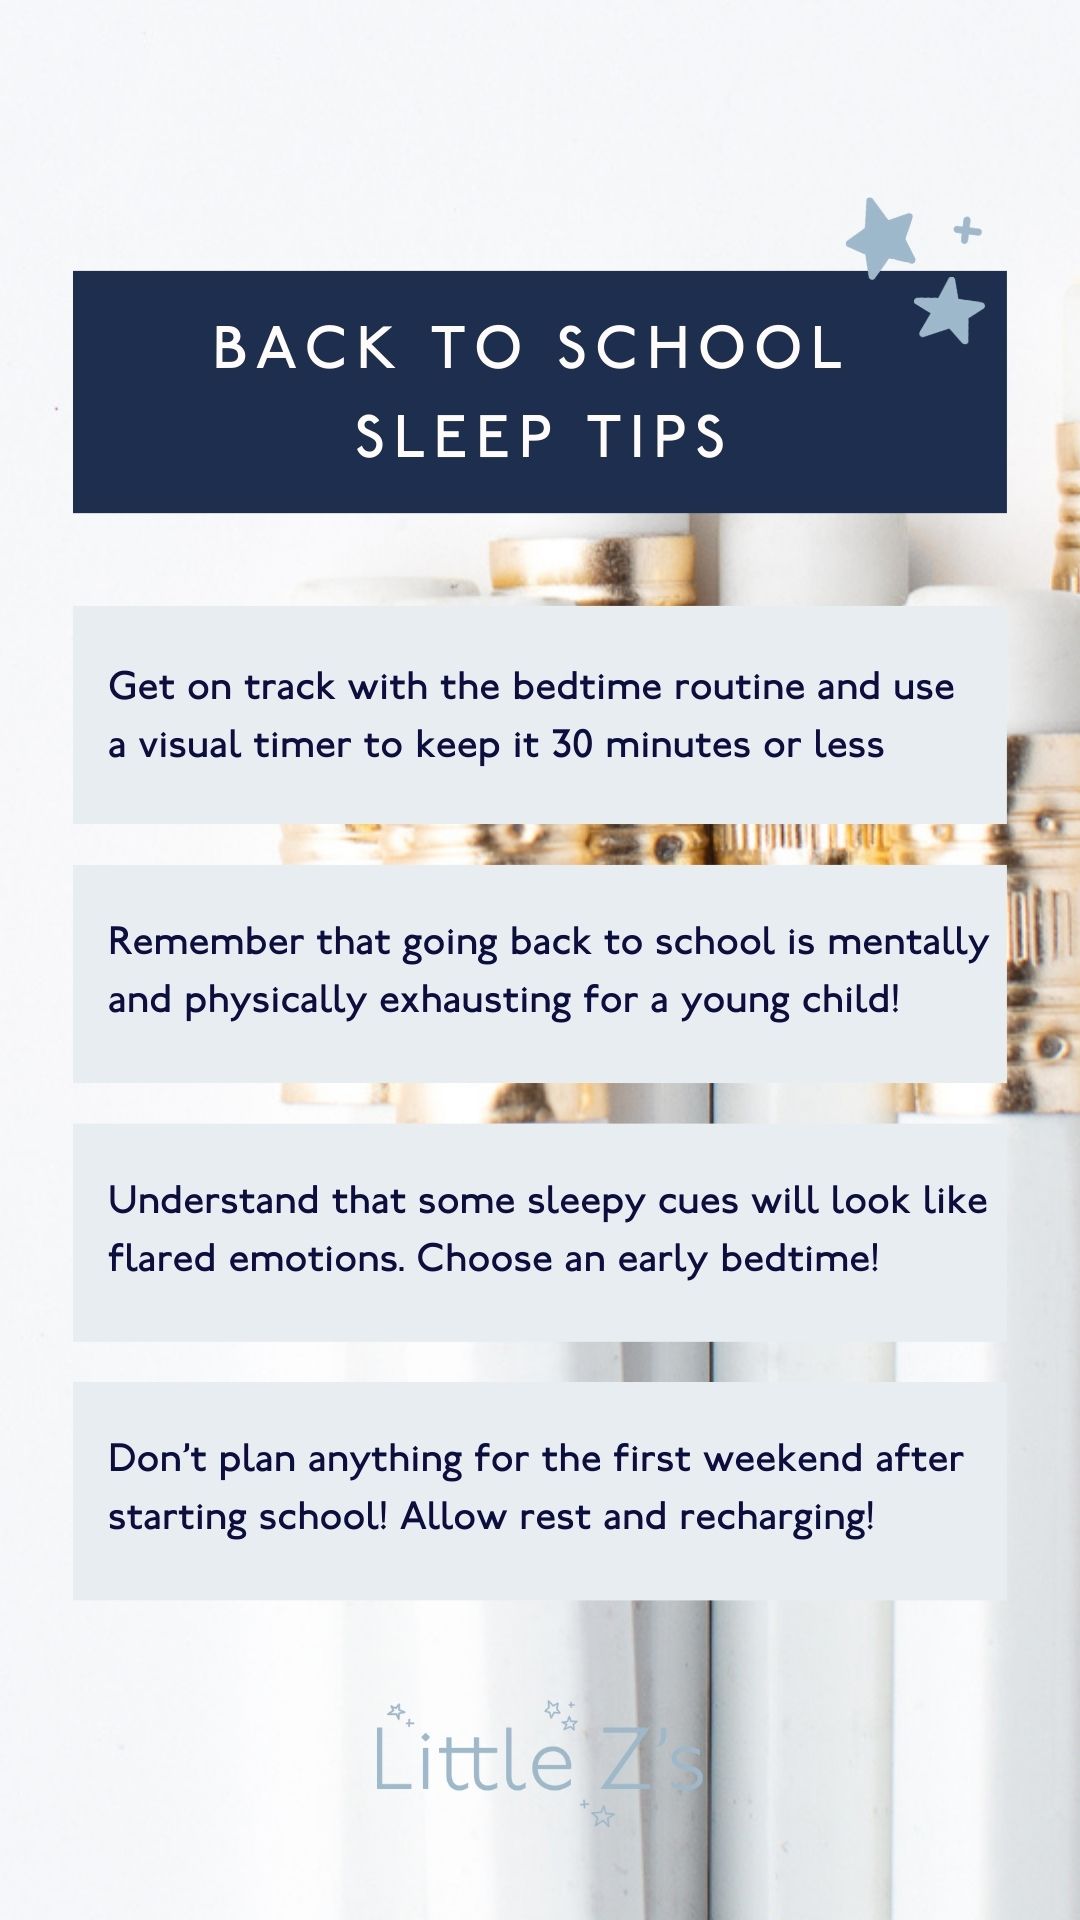 back to school sleep tips for kids